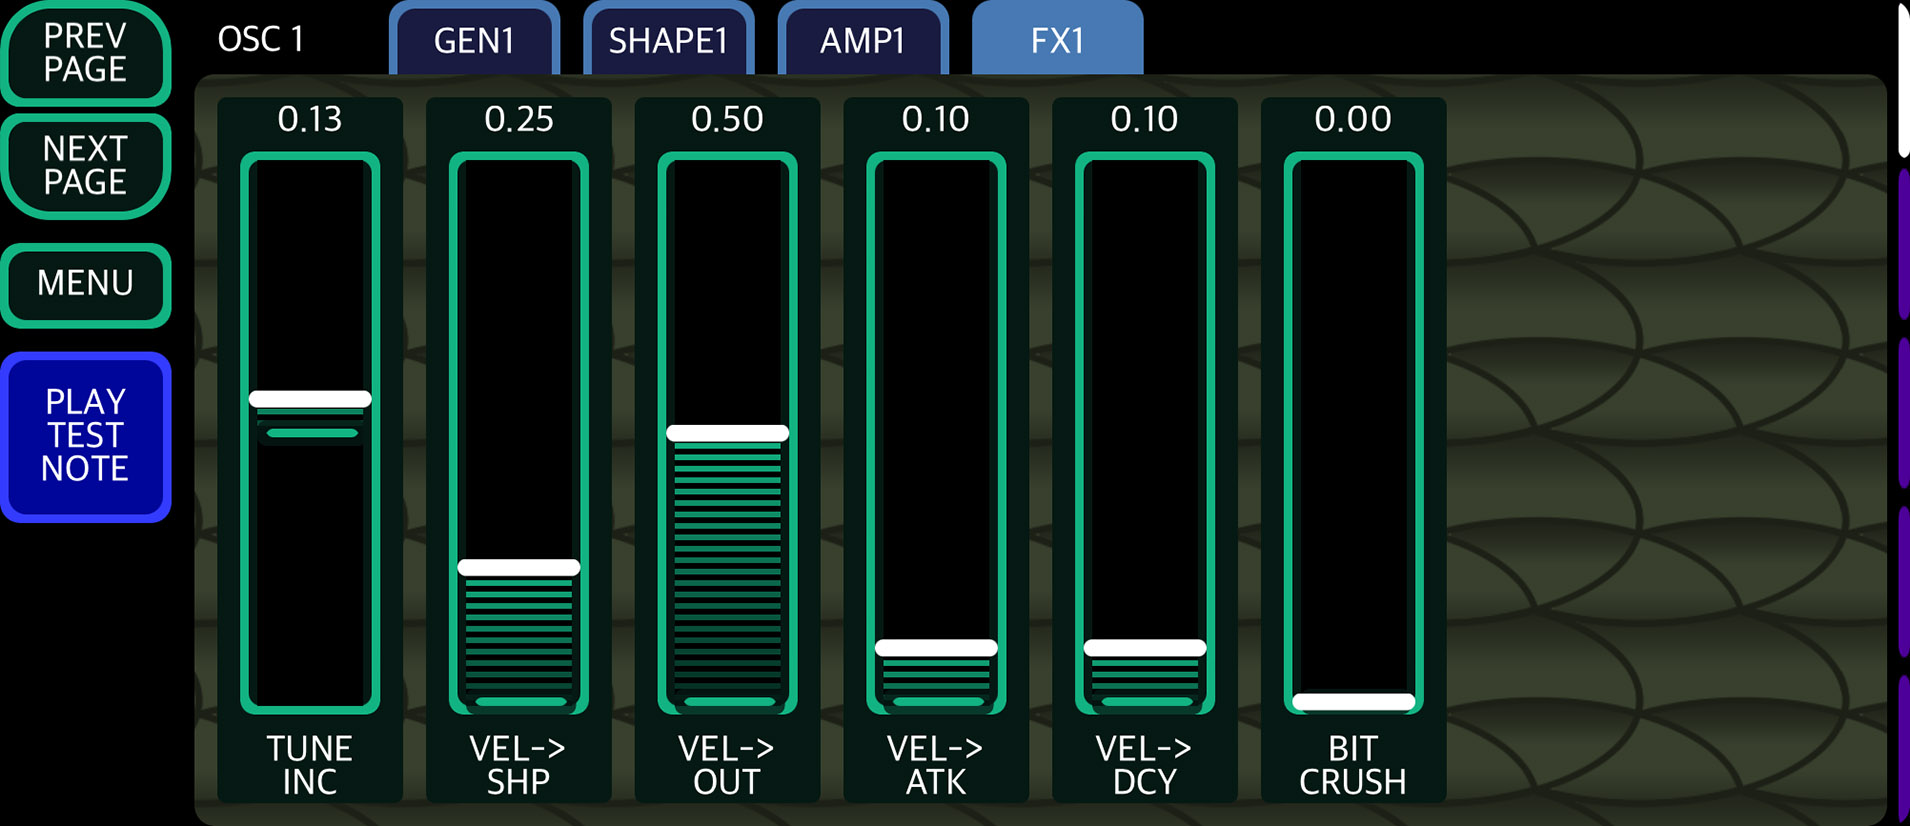 Oscillator page, effects (FX) tab